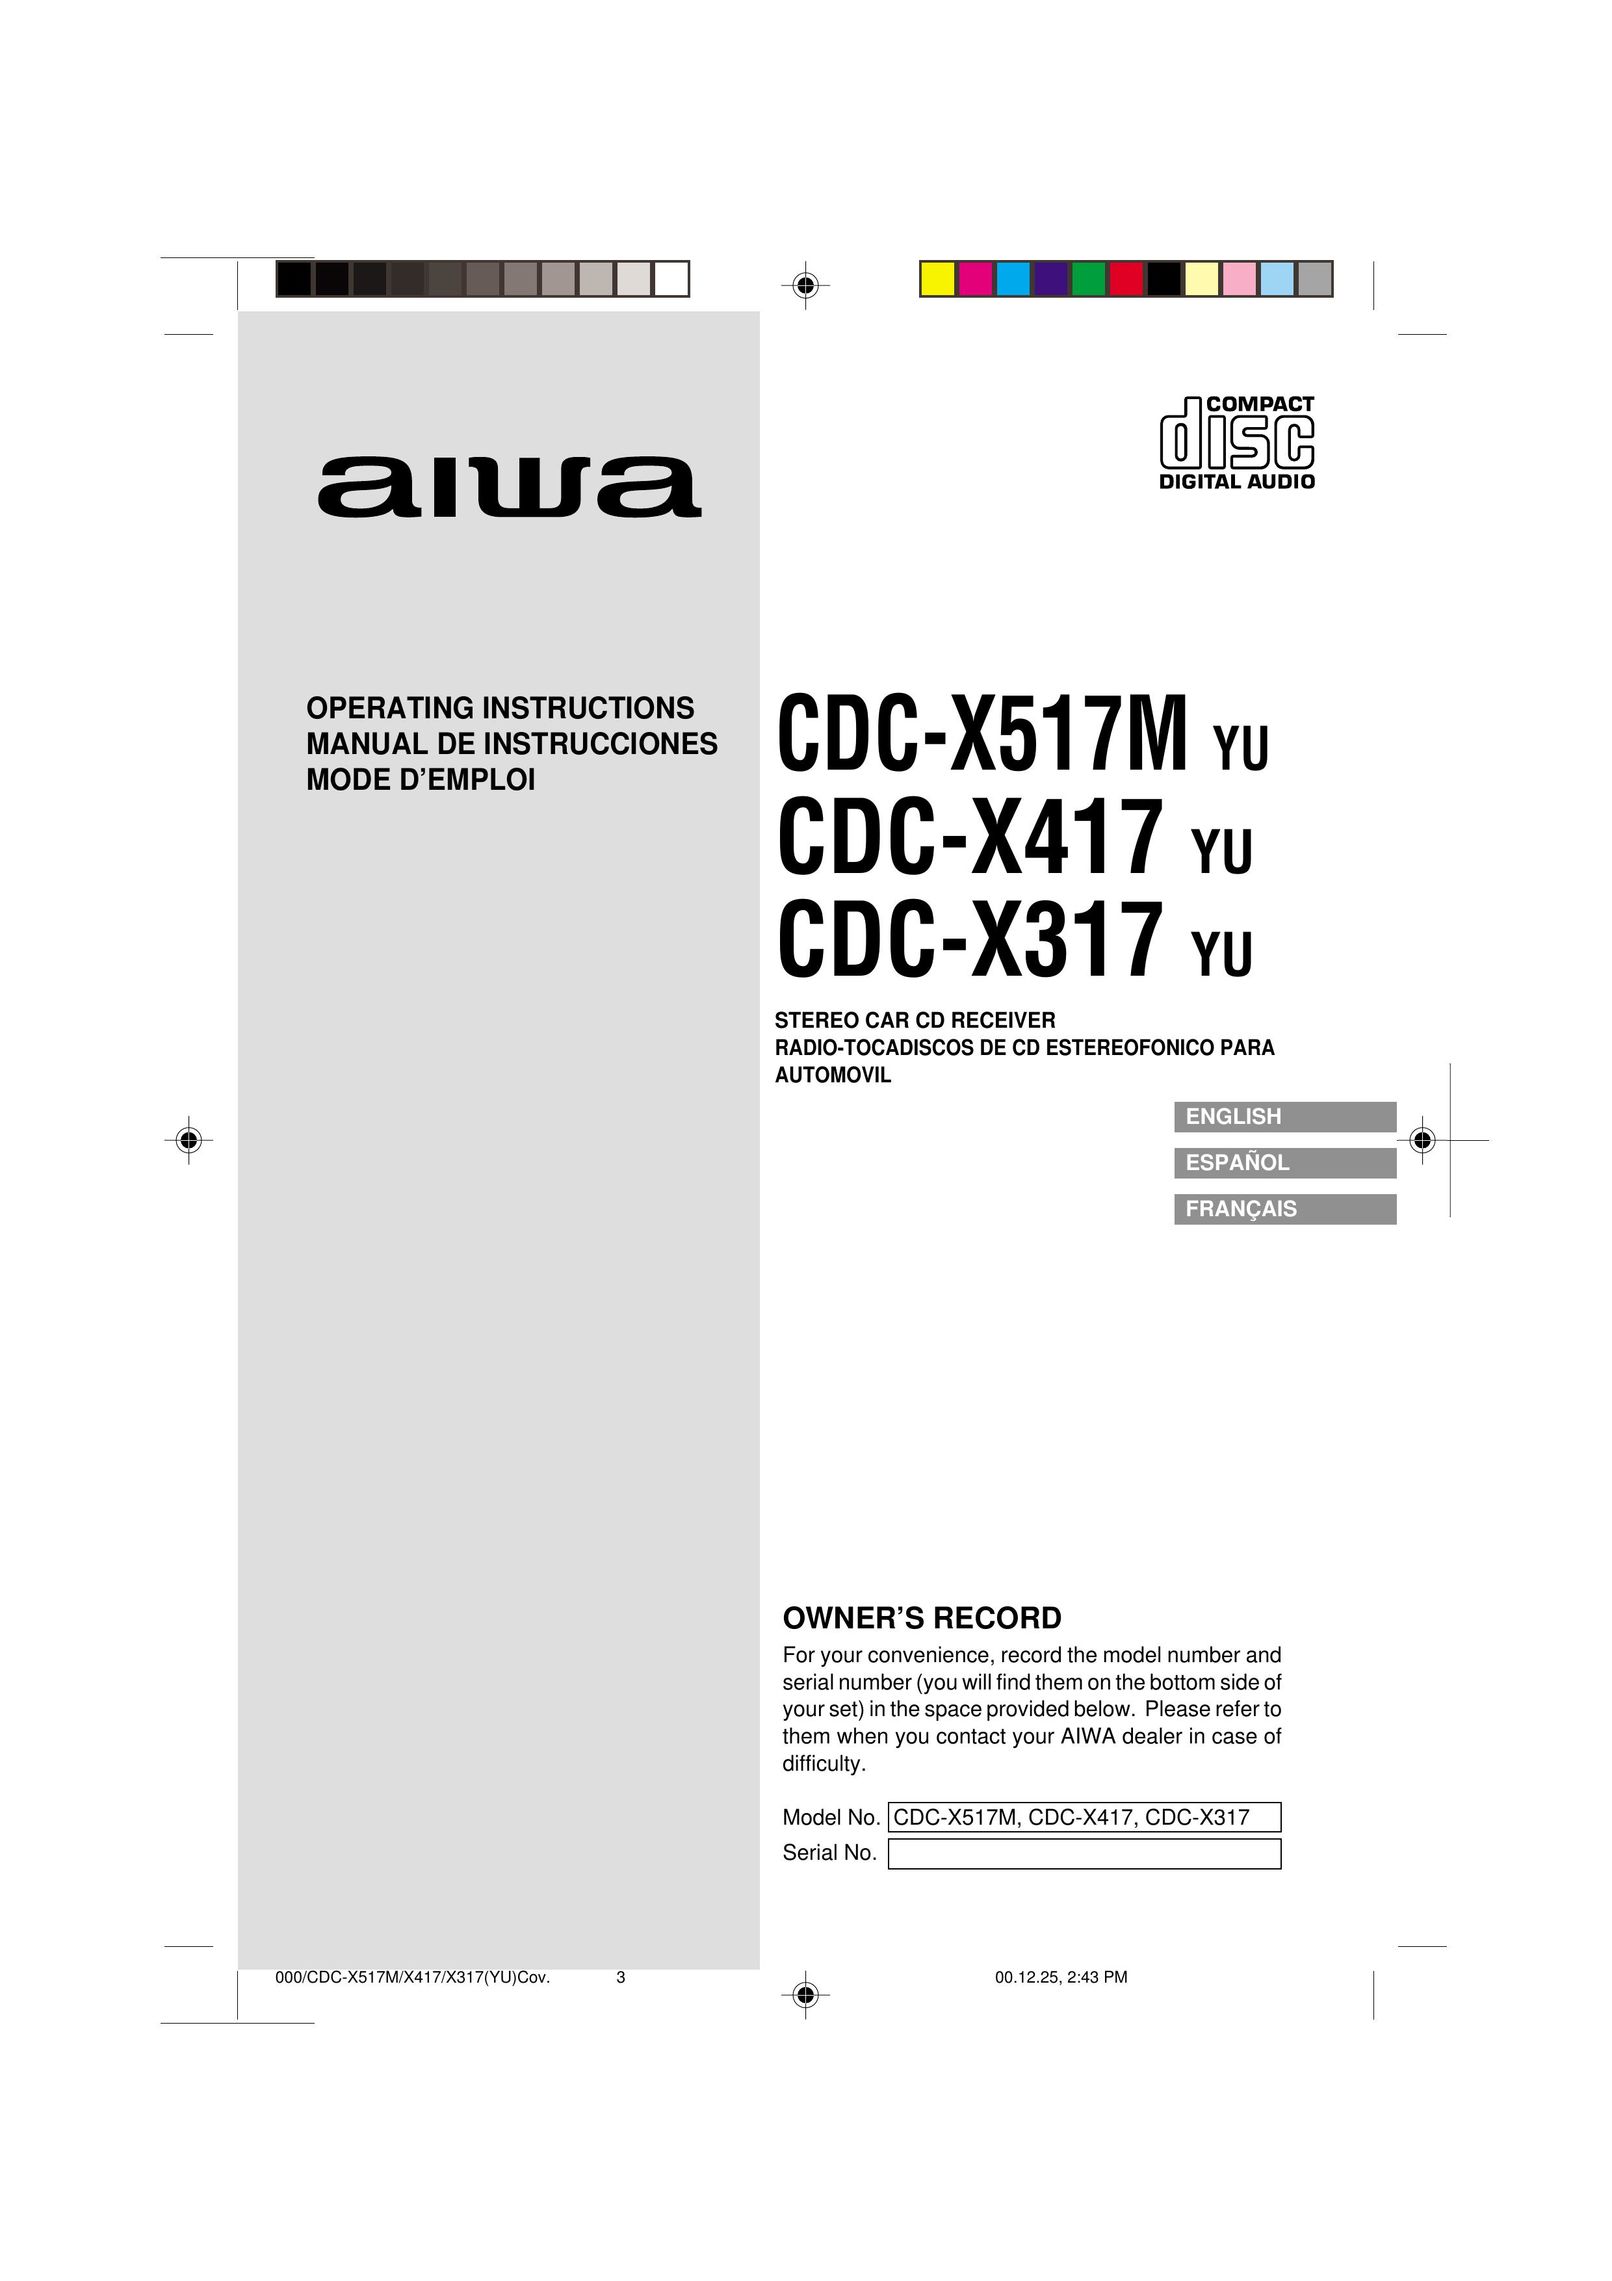 Aiwa CDC-X517M Car Stereo System User Manual